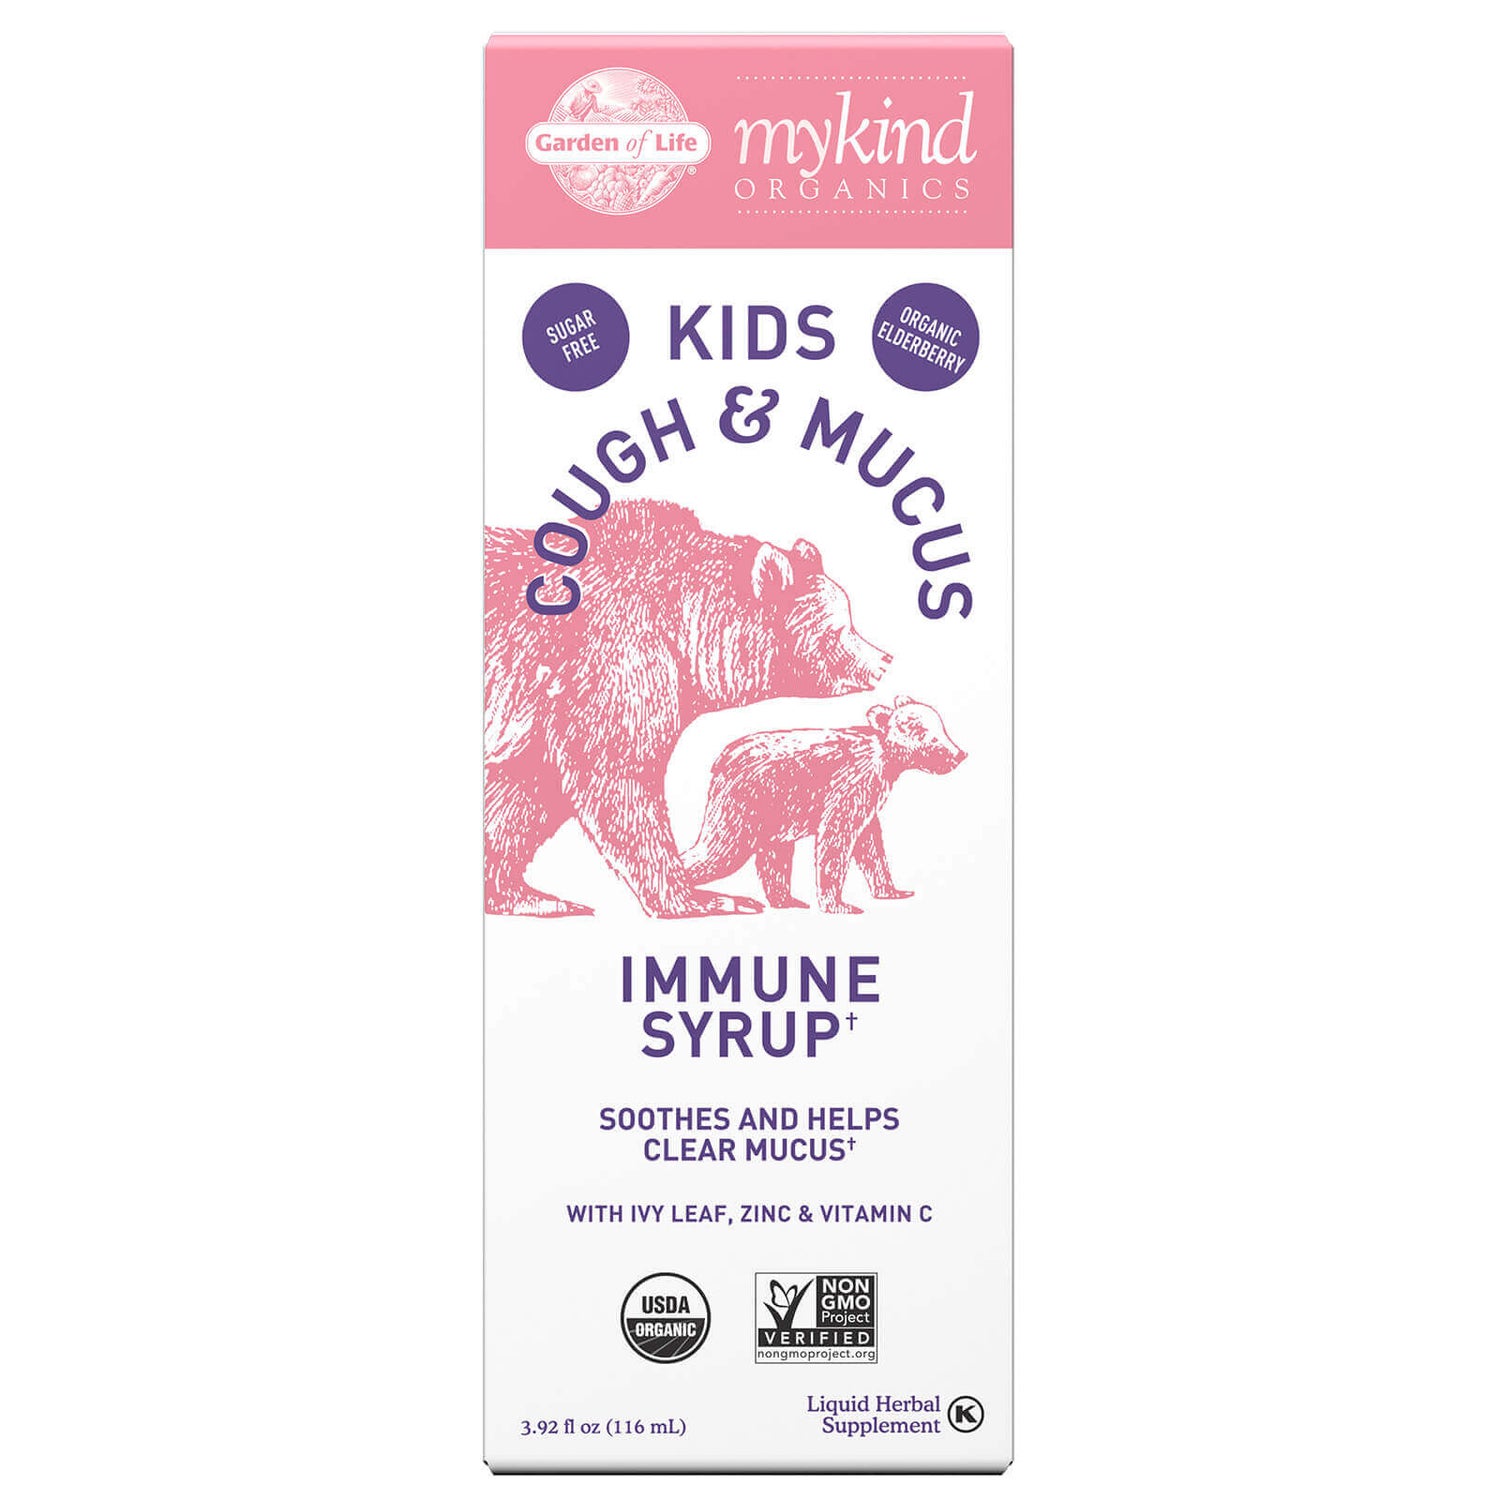 Mykind organics Kids Cough & Mucus Immune Syrup 116ml Liquid